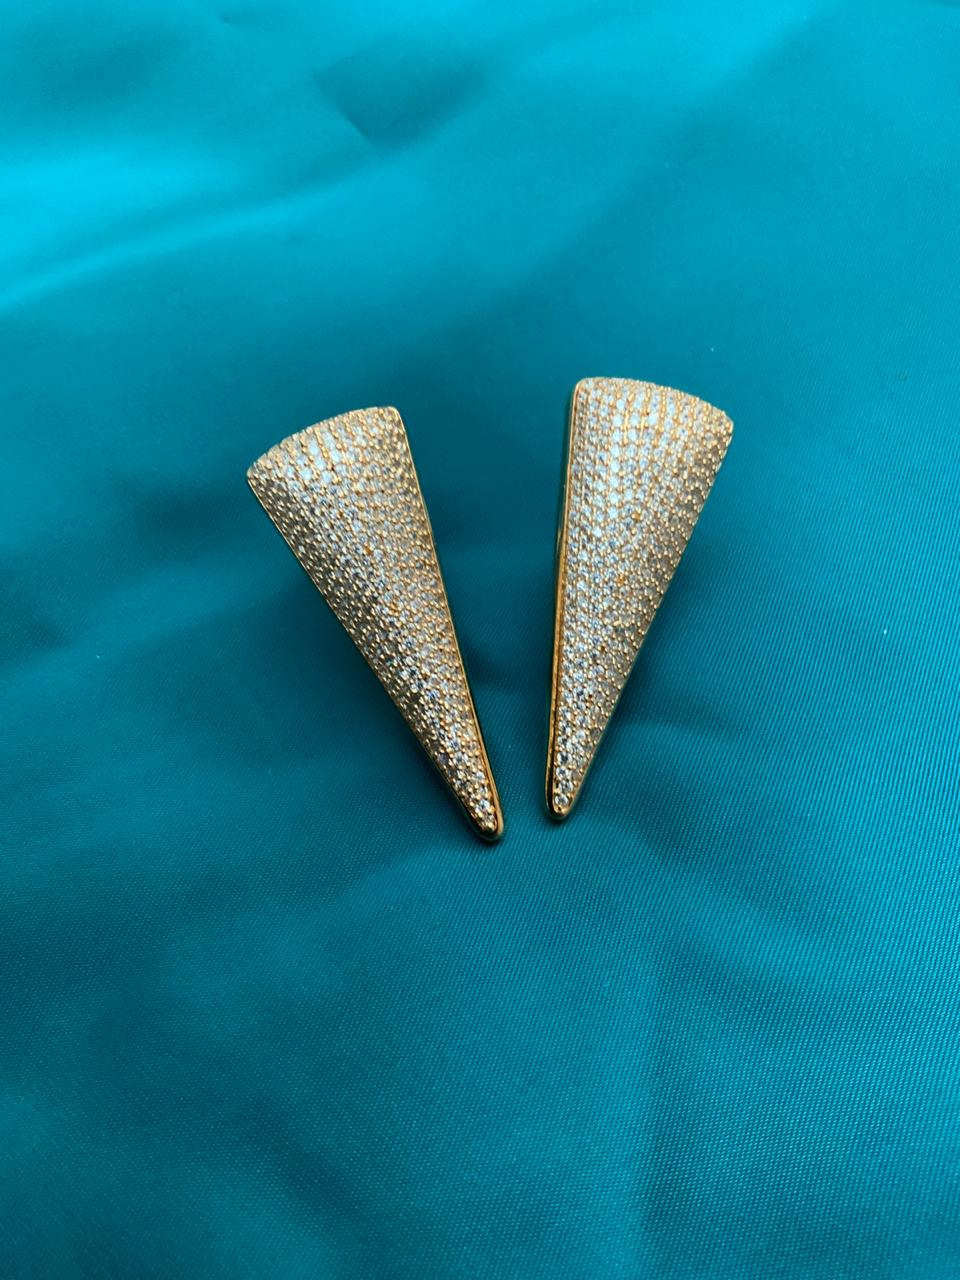 HandCraft Unique Design Earrings